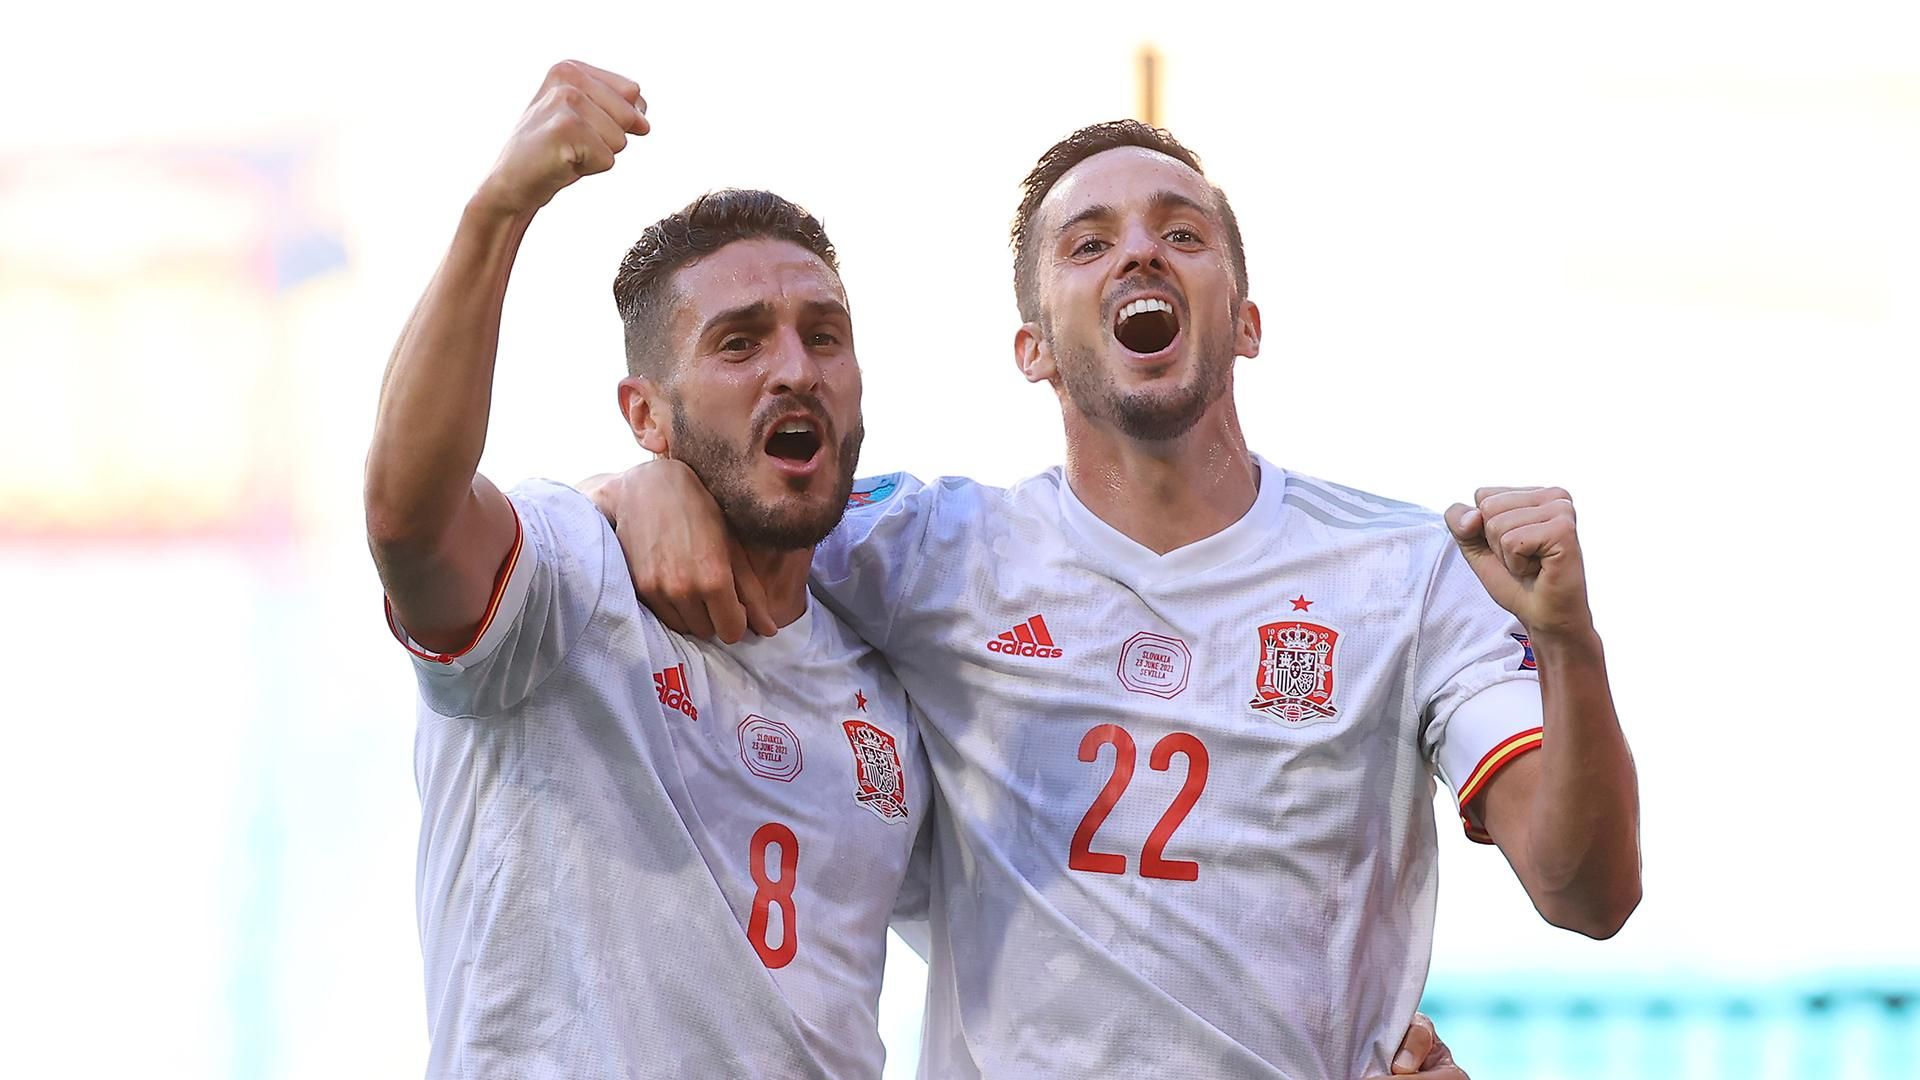 Словакия – Испания – результат, счет матча Евро 2020